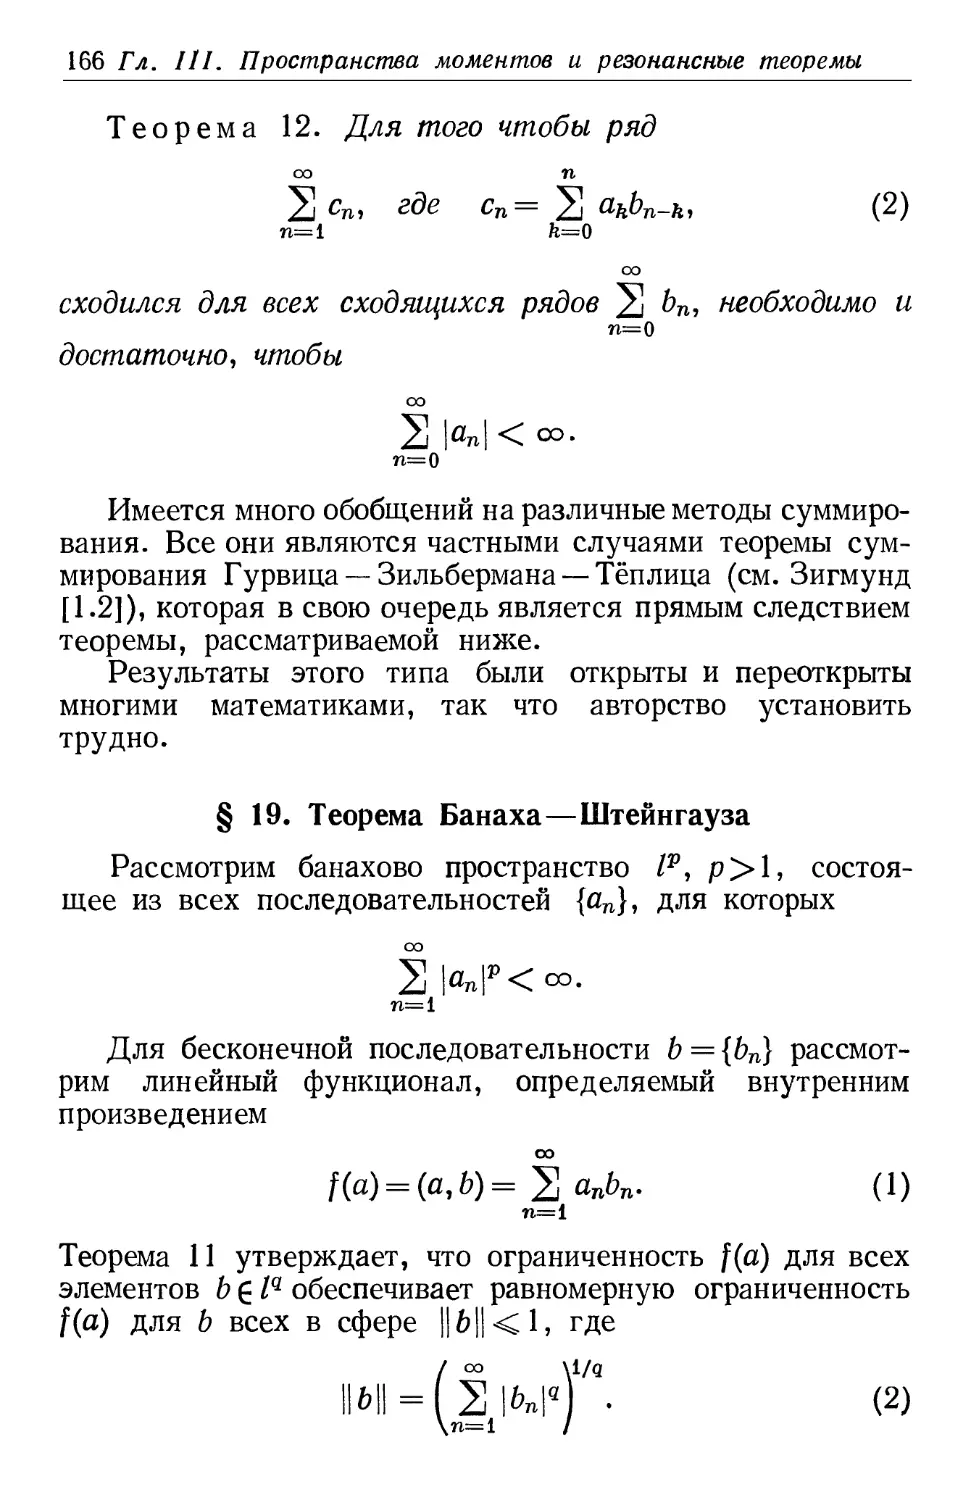 § 19. Теорема Банаха—Штейнгауза